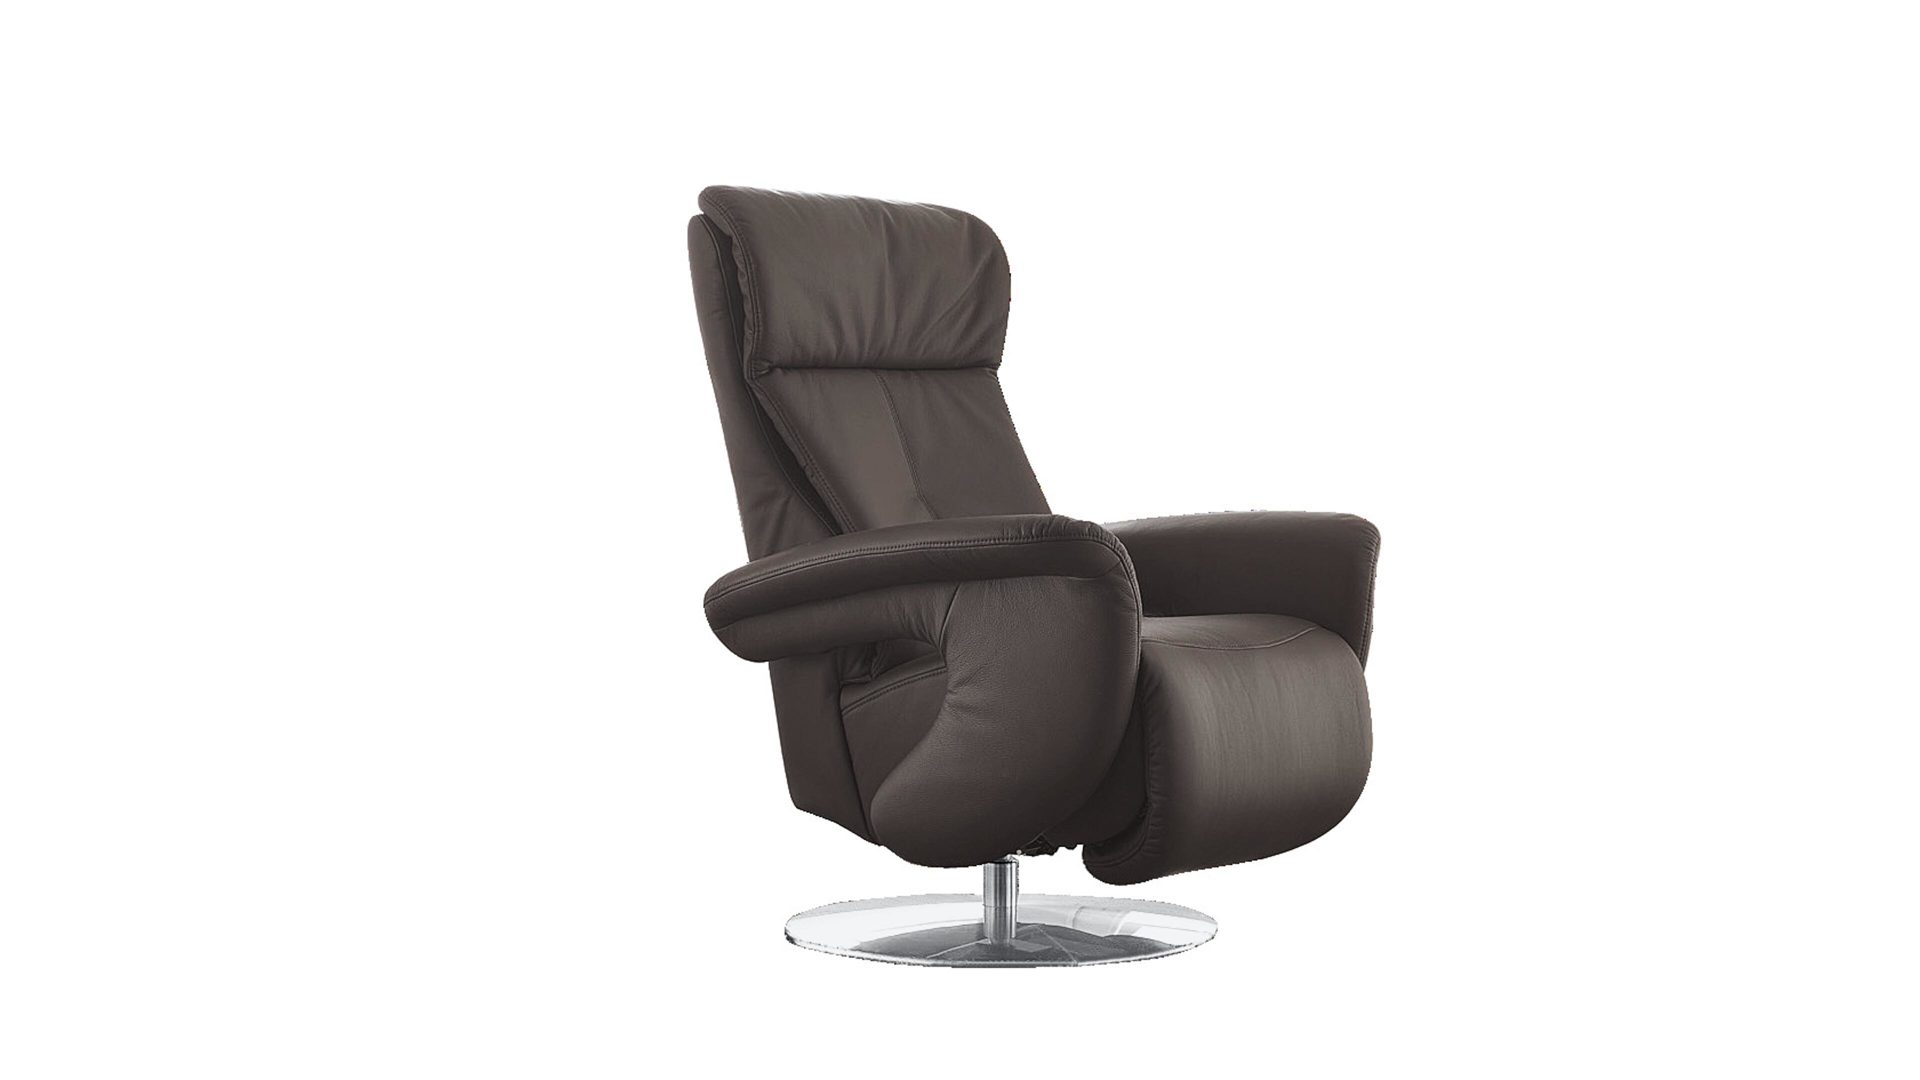 Relaxsessel comfortmaster besser sitzen, liegen, leben aus Leder in Braun Comfortmaster Easy-Swing-Sessel bzw. Polstermöbel 7333 braunes LongLife-Leder 31 & Metall-Tellerfuß